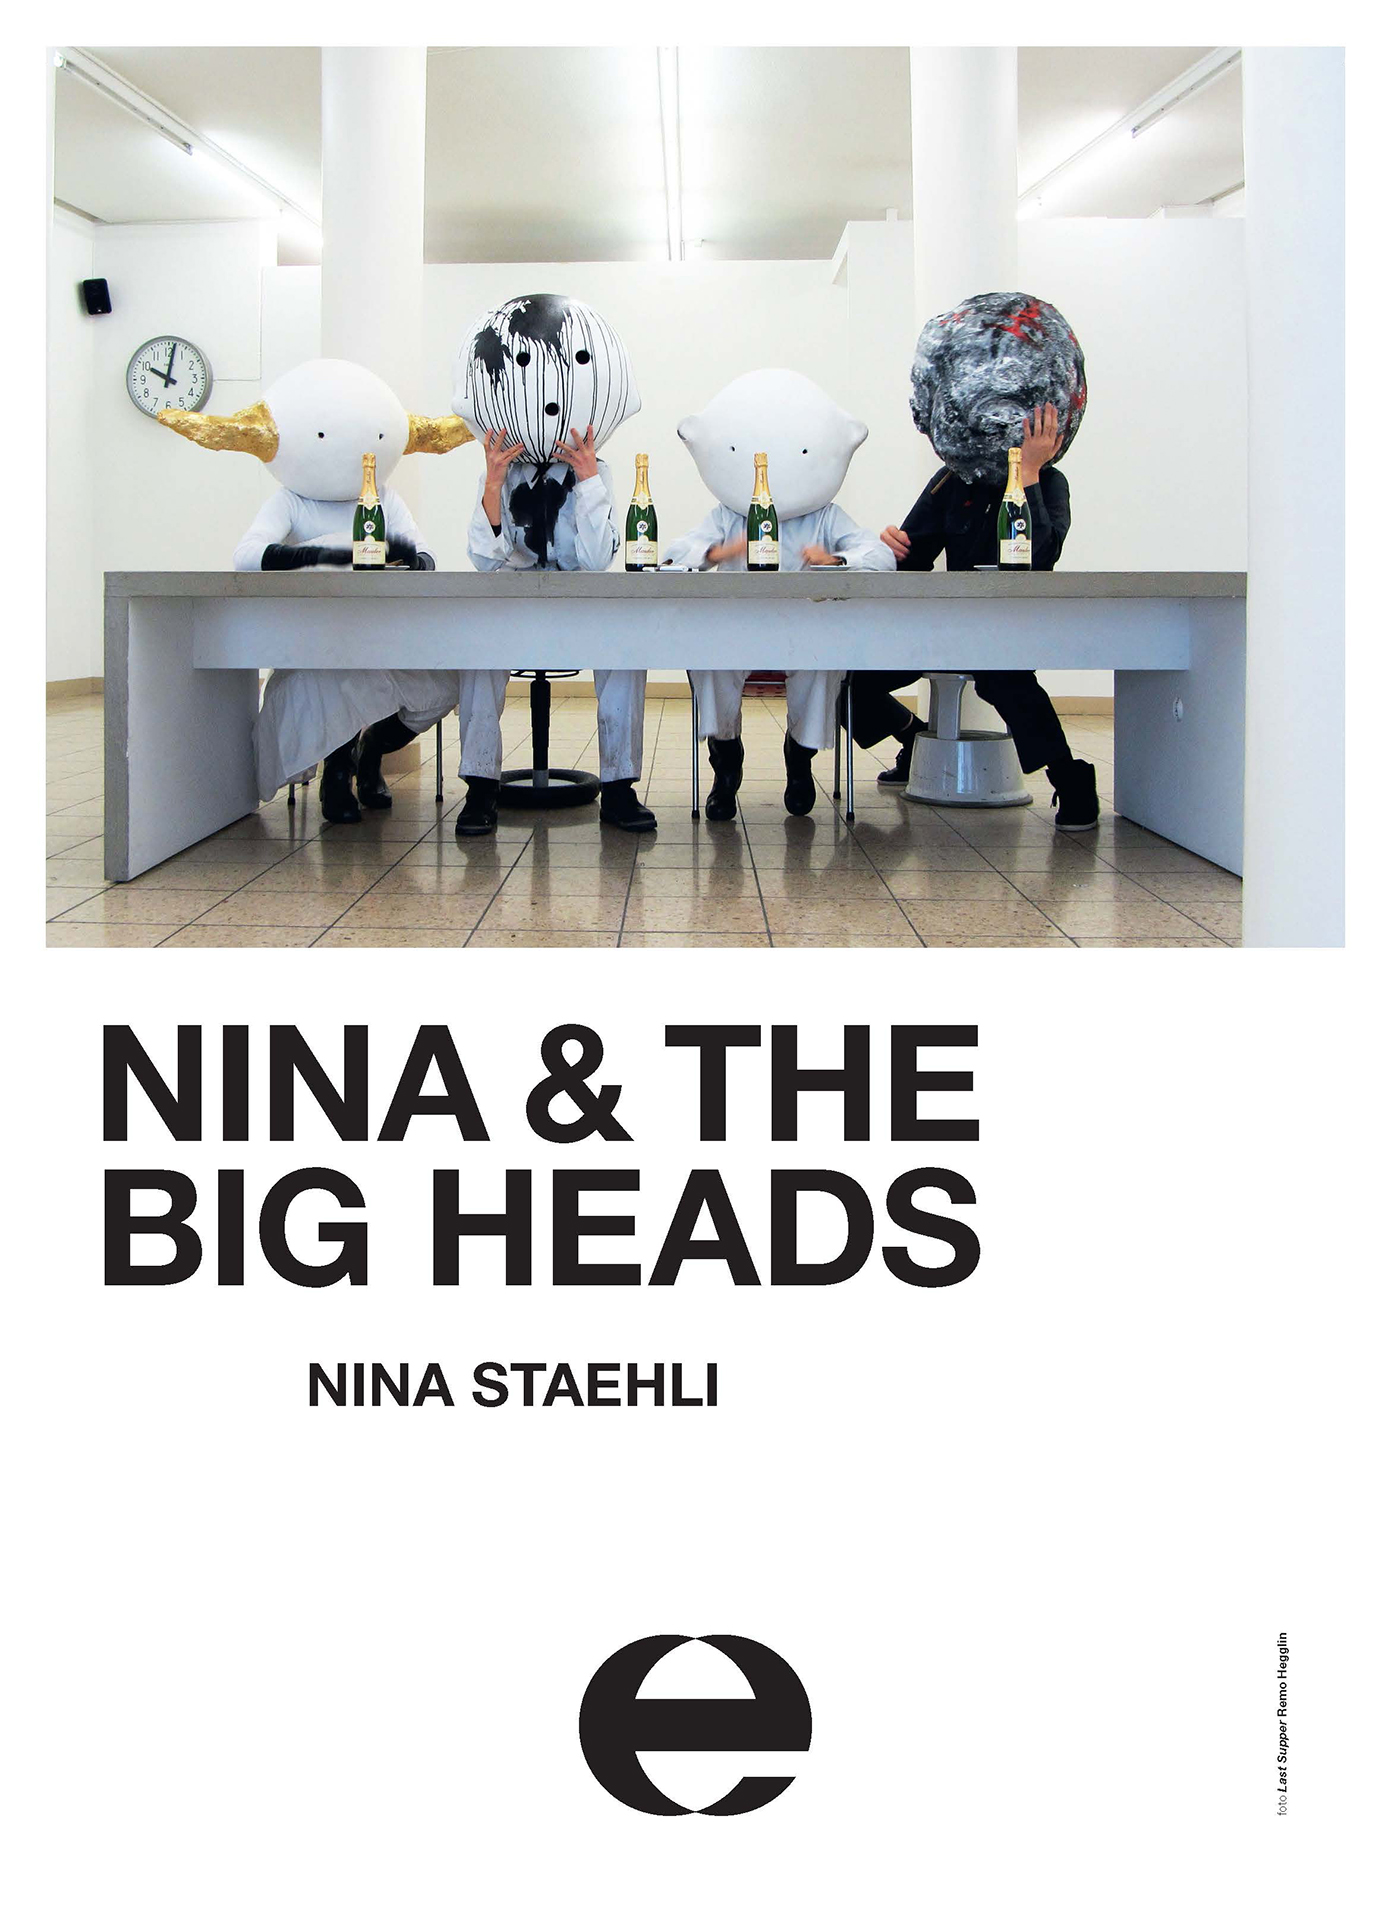 Nina Staehli and the Big Heads Etherea Genova